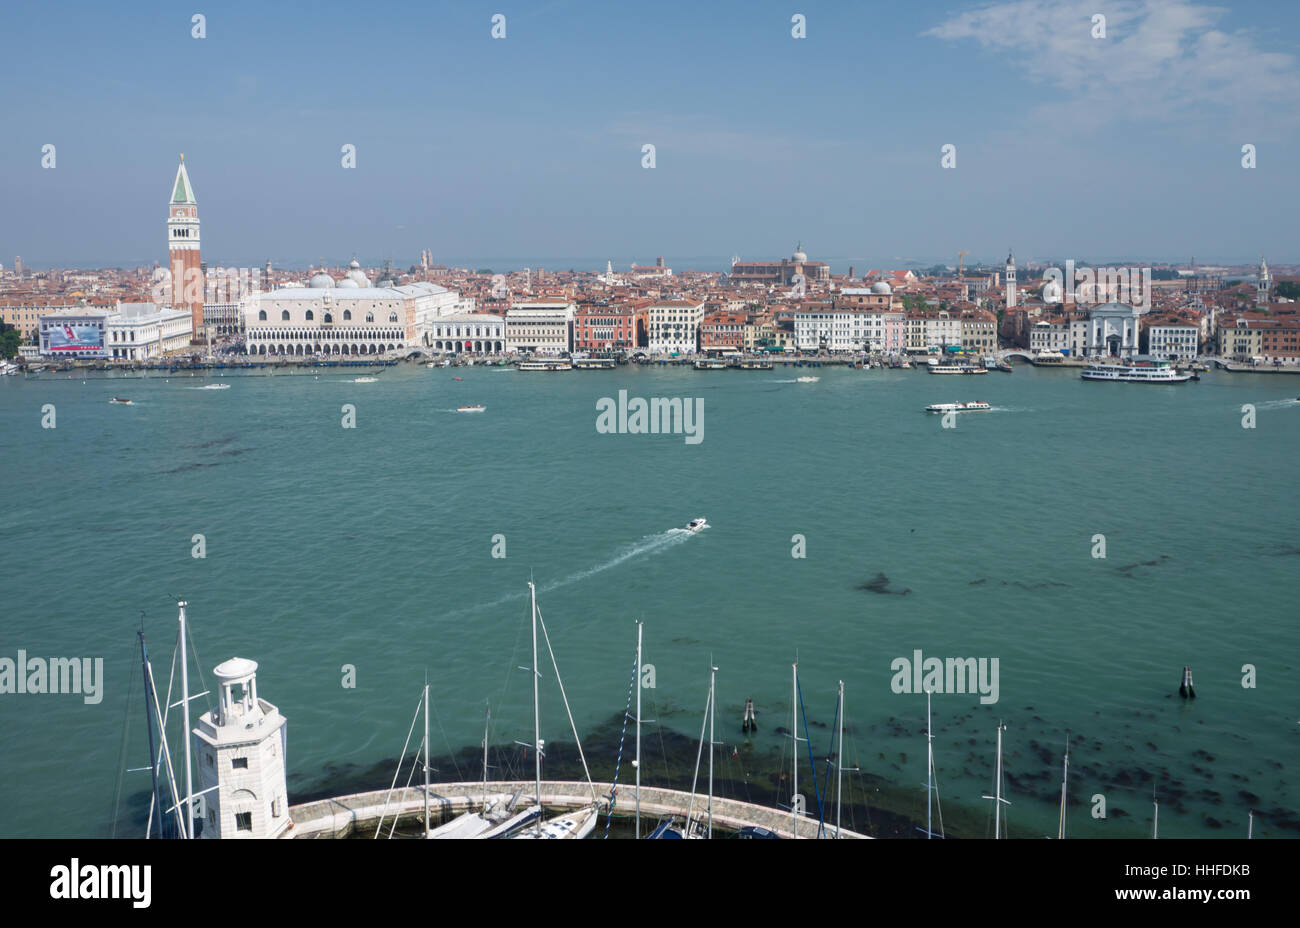 Venedig, Palast, Mensch, Menschen, Menschen, Folk, Personen, Menschen, Menschen Stockfoto